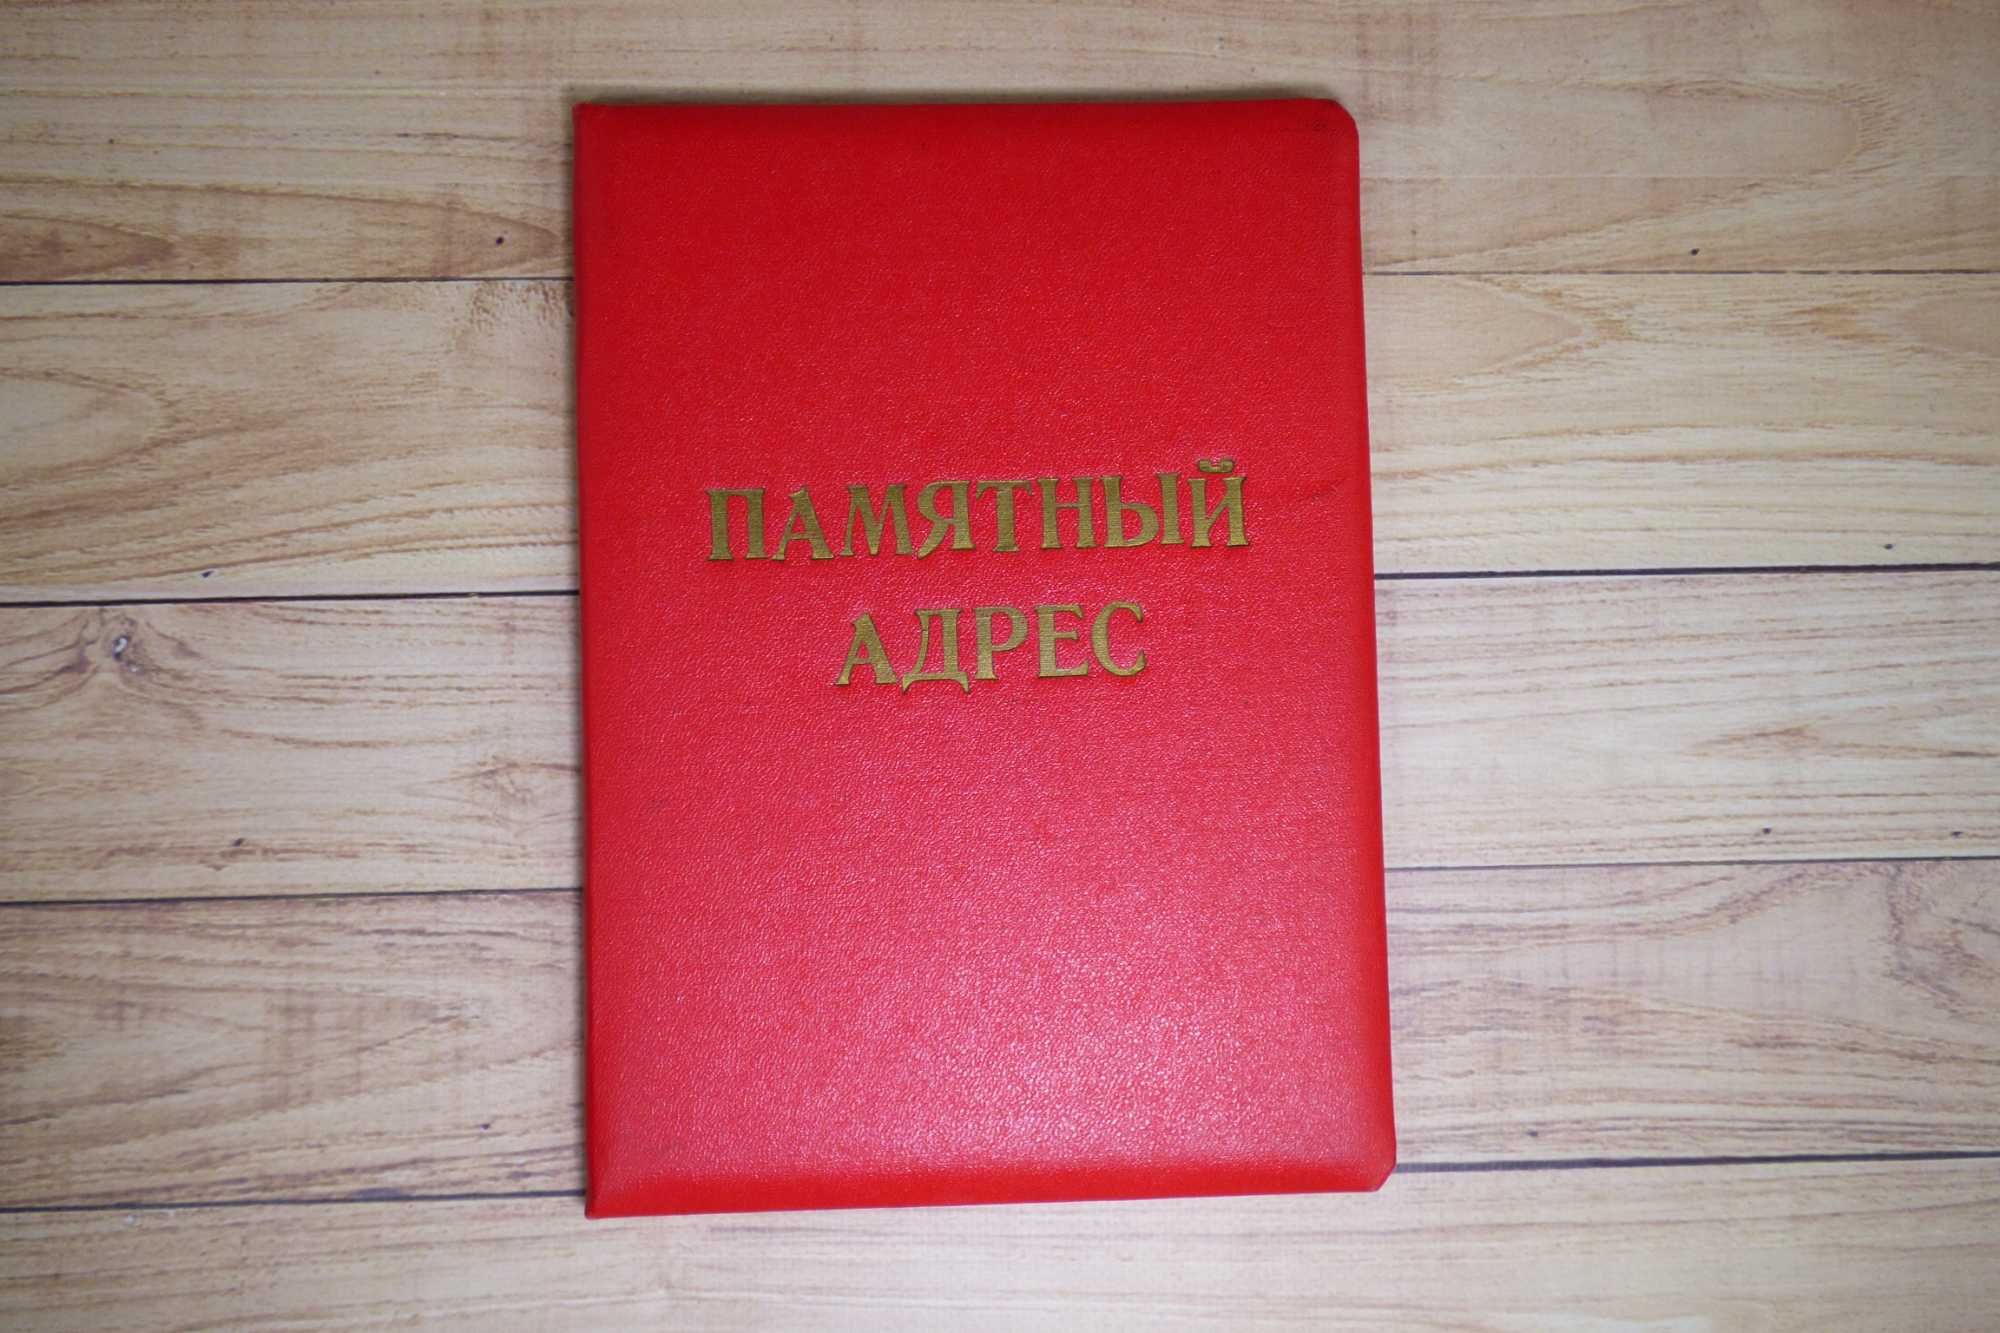 Папка советская красная Памятный адрес размера А5